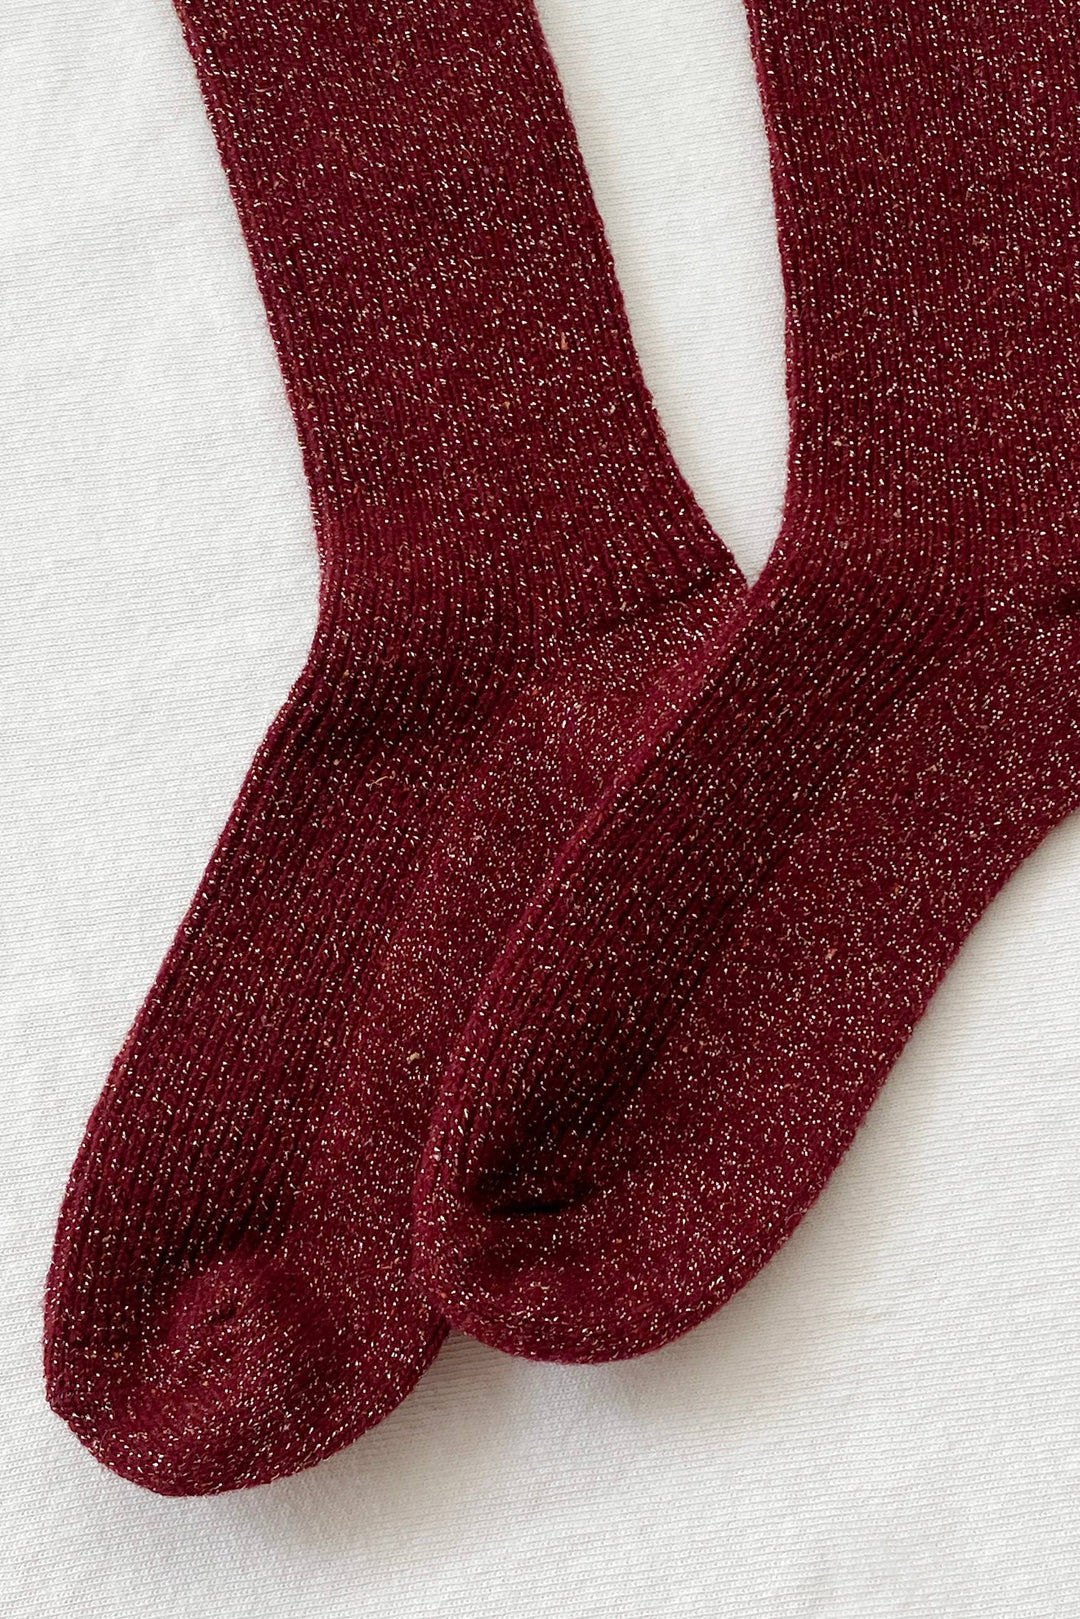 Le Bon Shoppe Winter Sparkle Socks: Wine